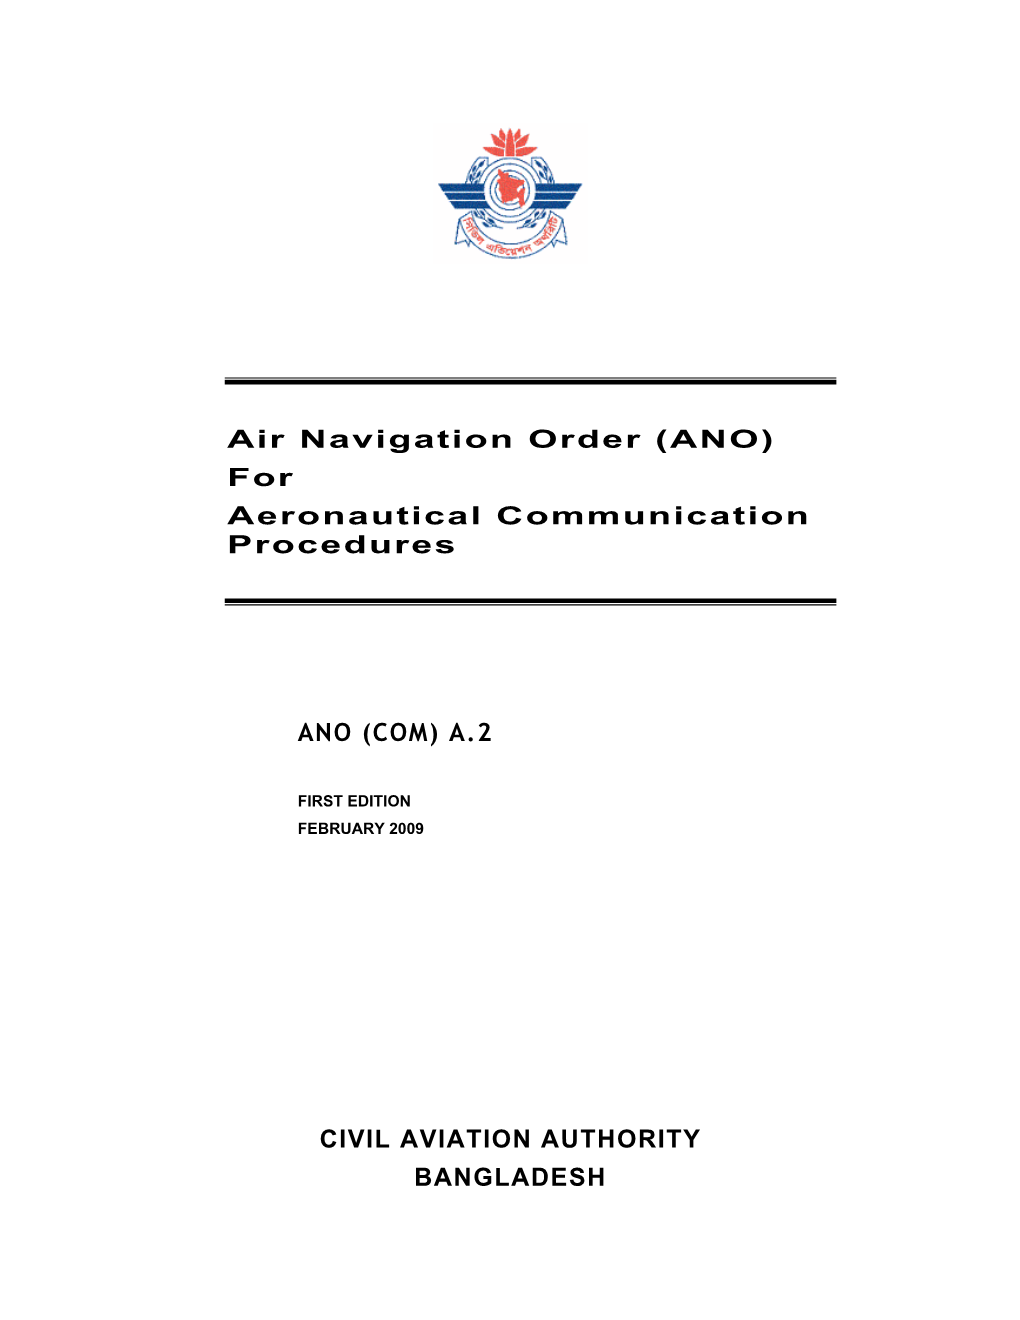 ANO) for Aeronautical Communication Procedures